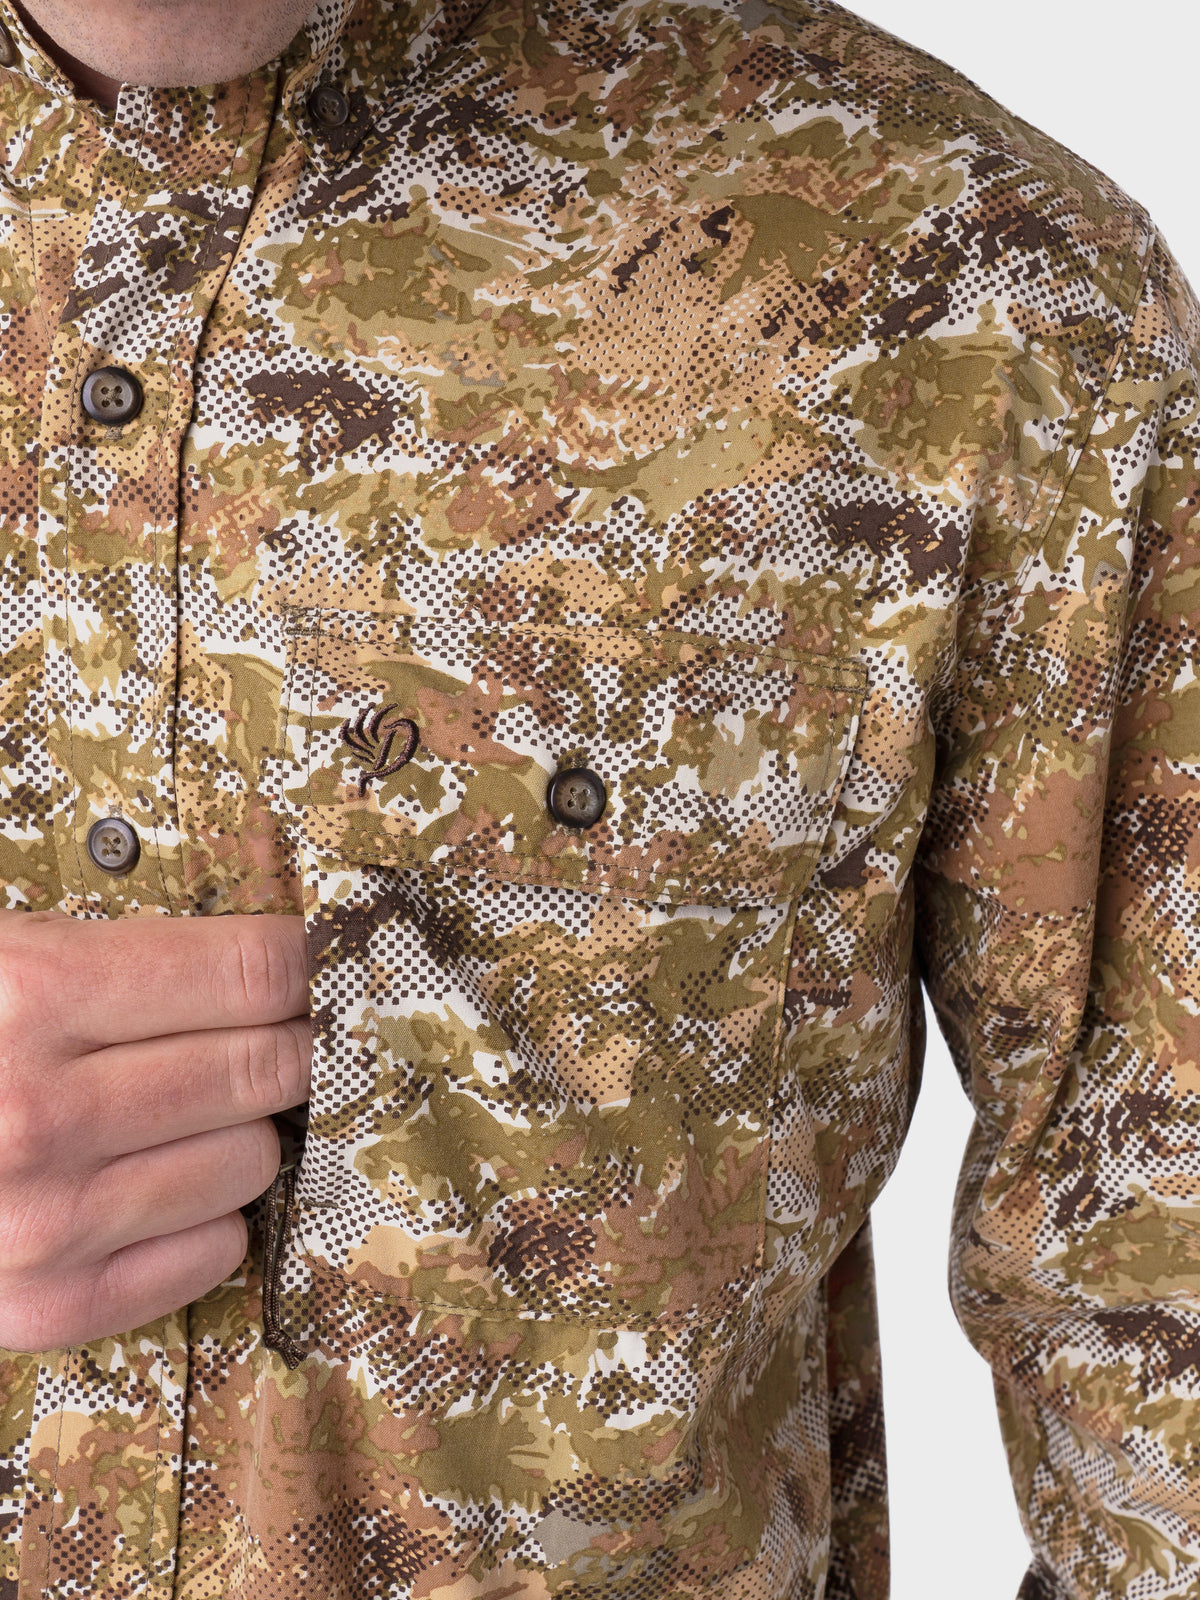 Duck Camp Lightweight Hunting Shirt - Men's Military Green, M